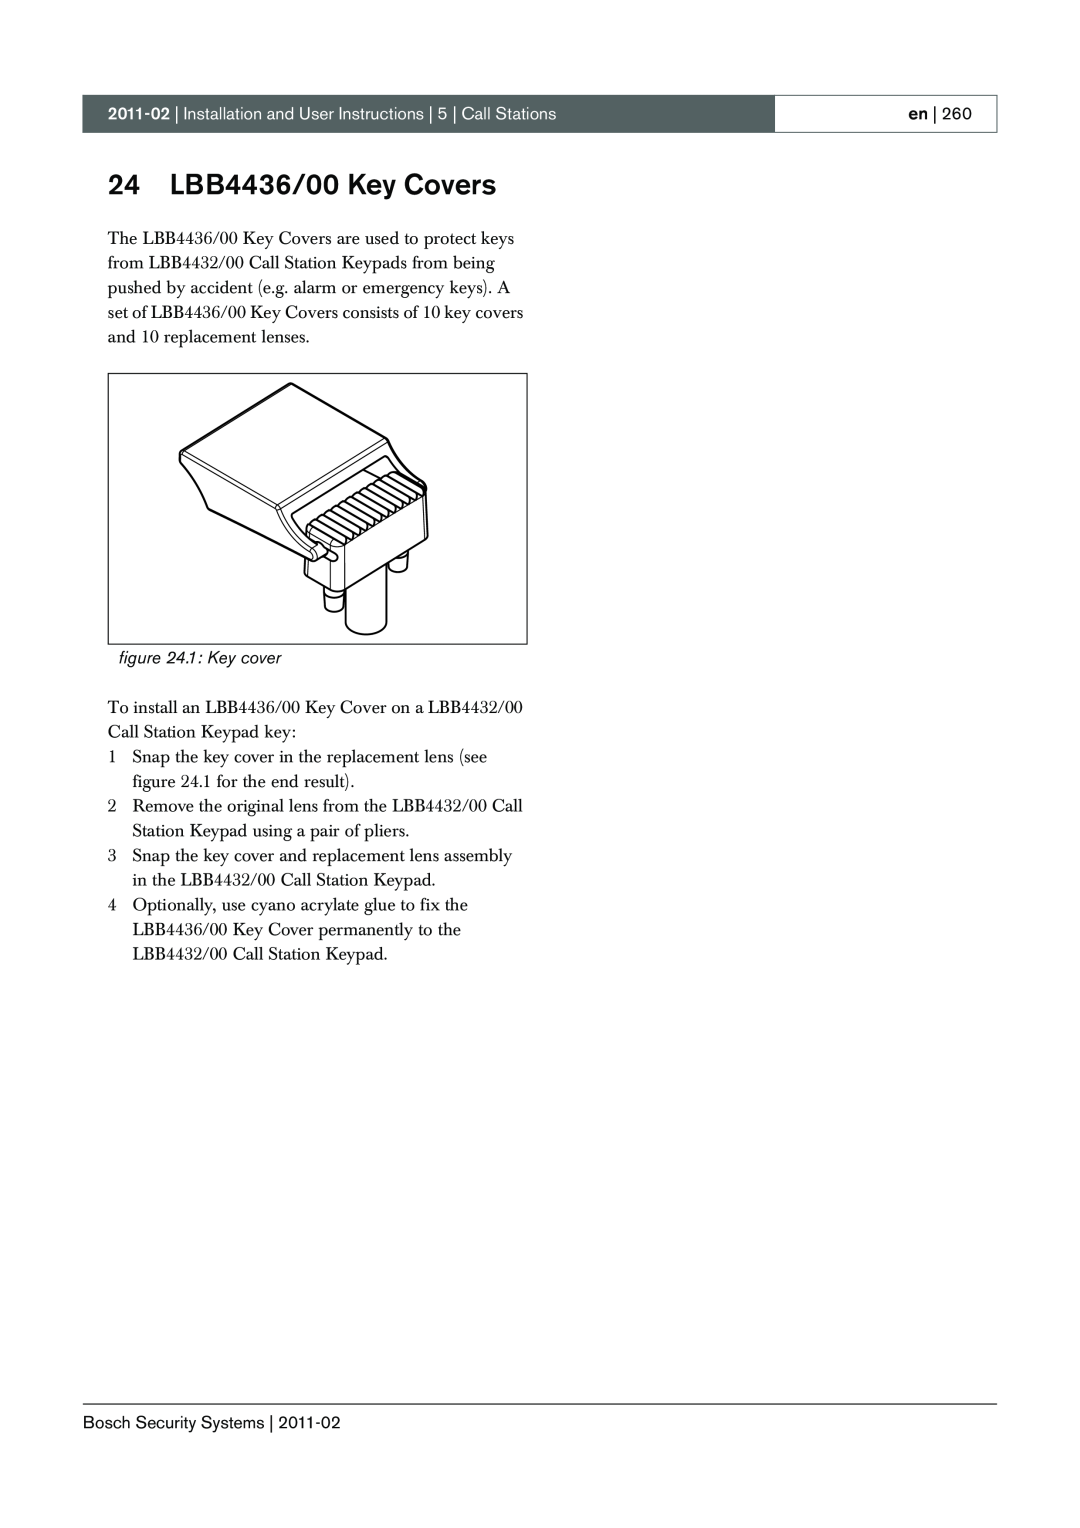 Bosch Appliances 3.5 manual 24 LBB4436/00 Key Covers, 1: Key cover 